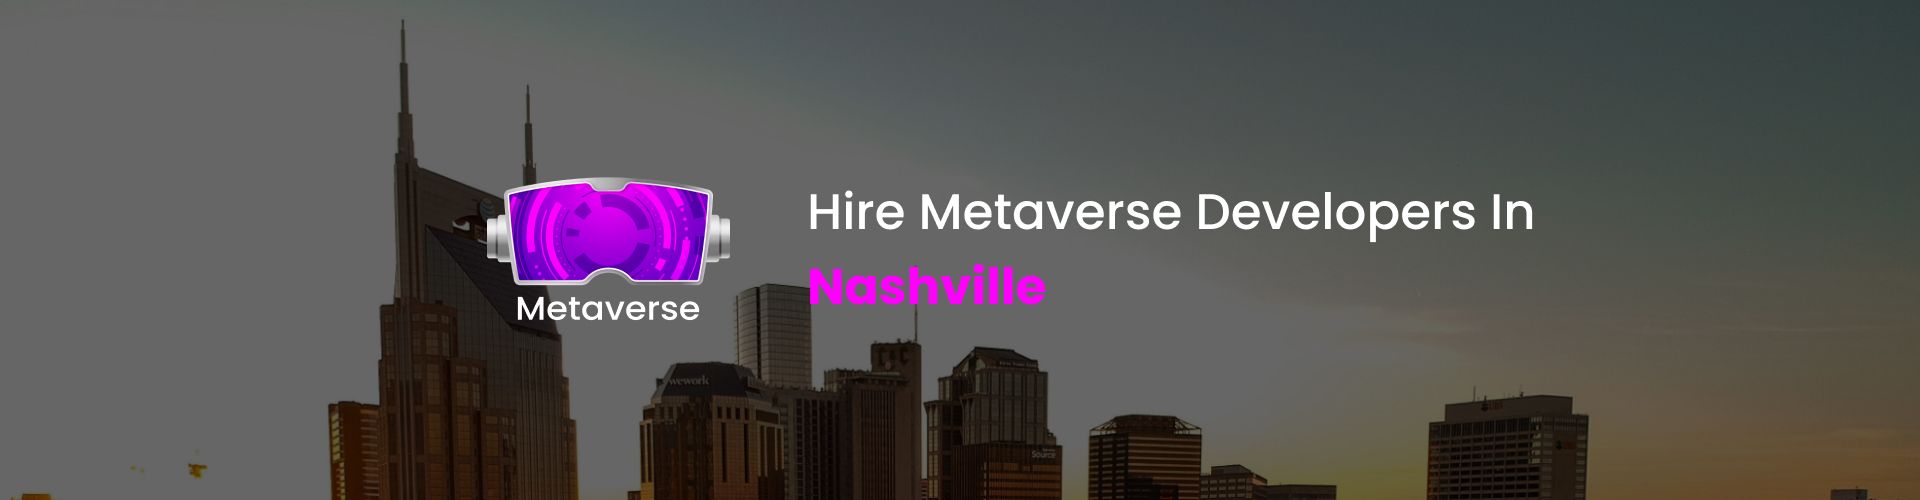 hire metaverse developers in nashville